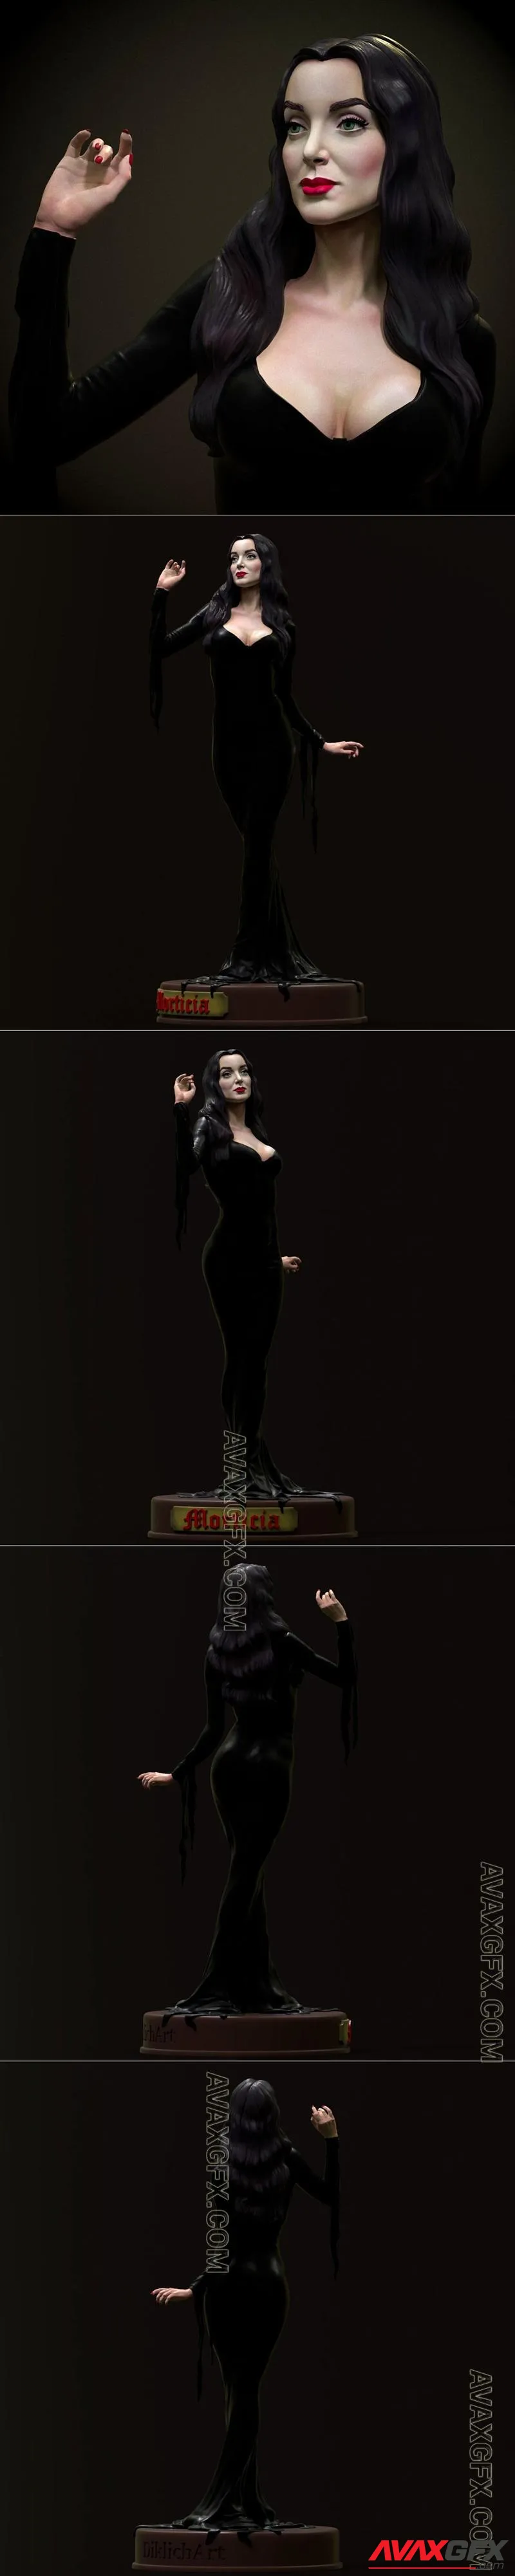 Diklich Art - Morticia Addams - STL 3D Model